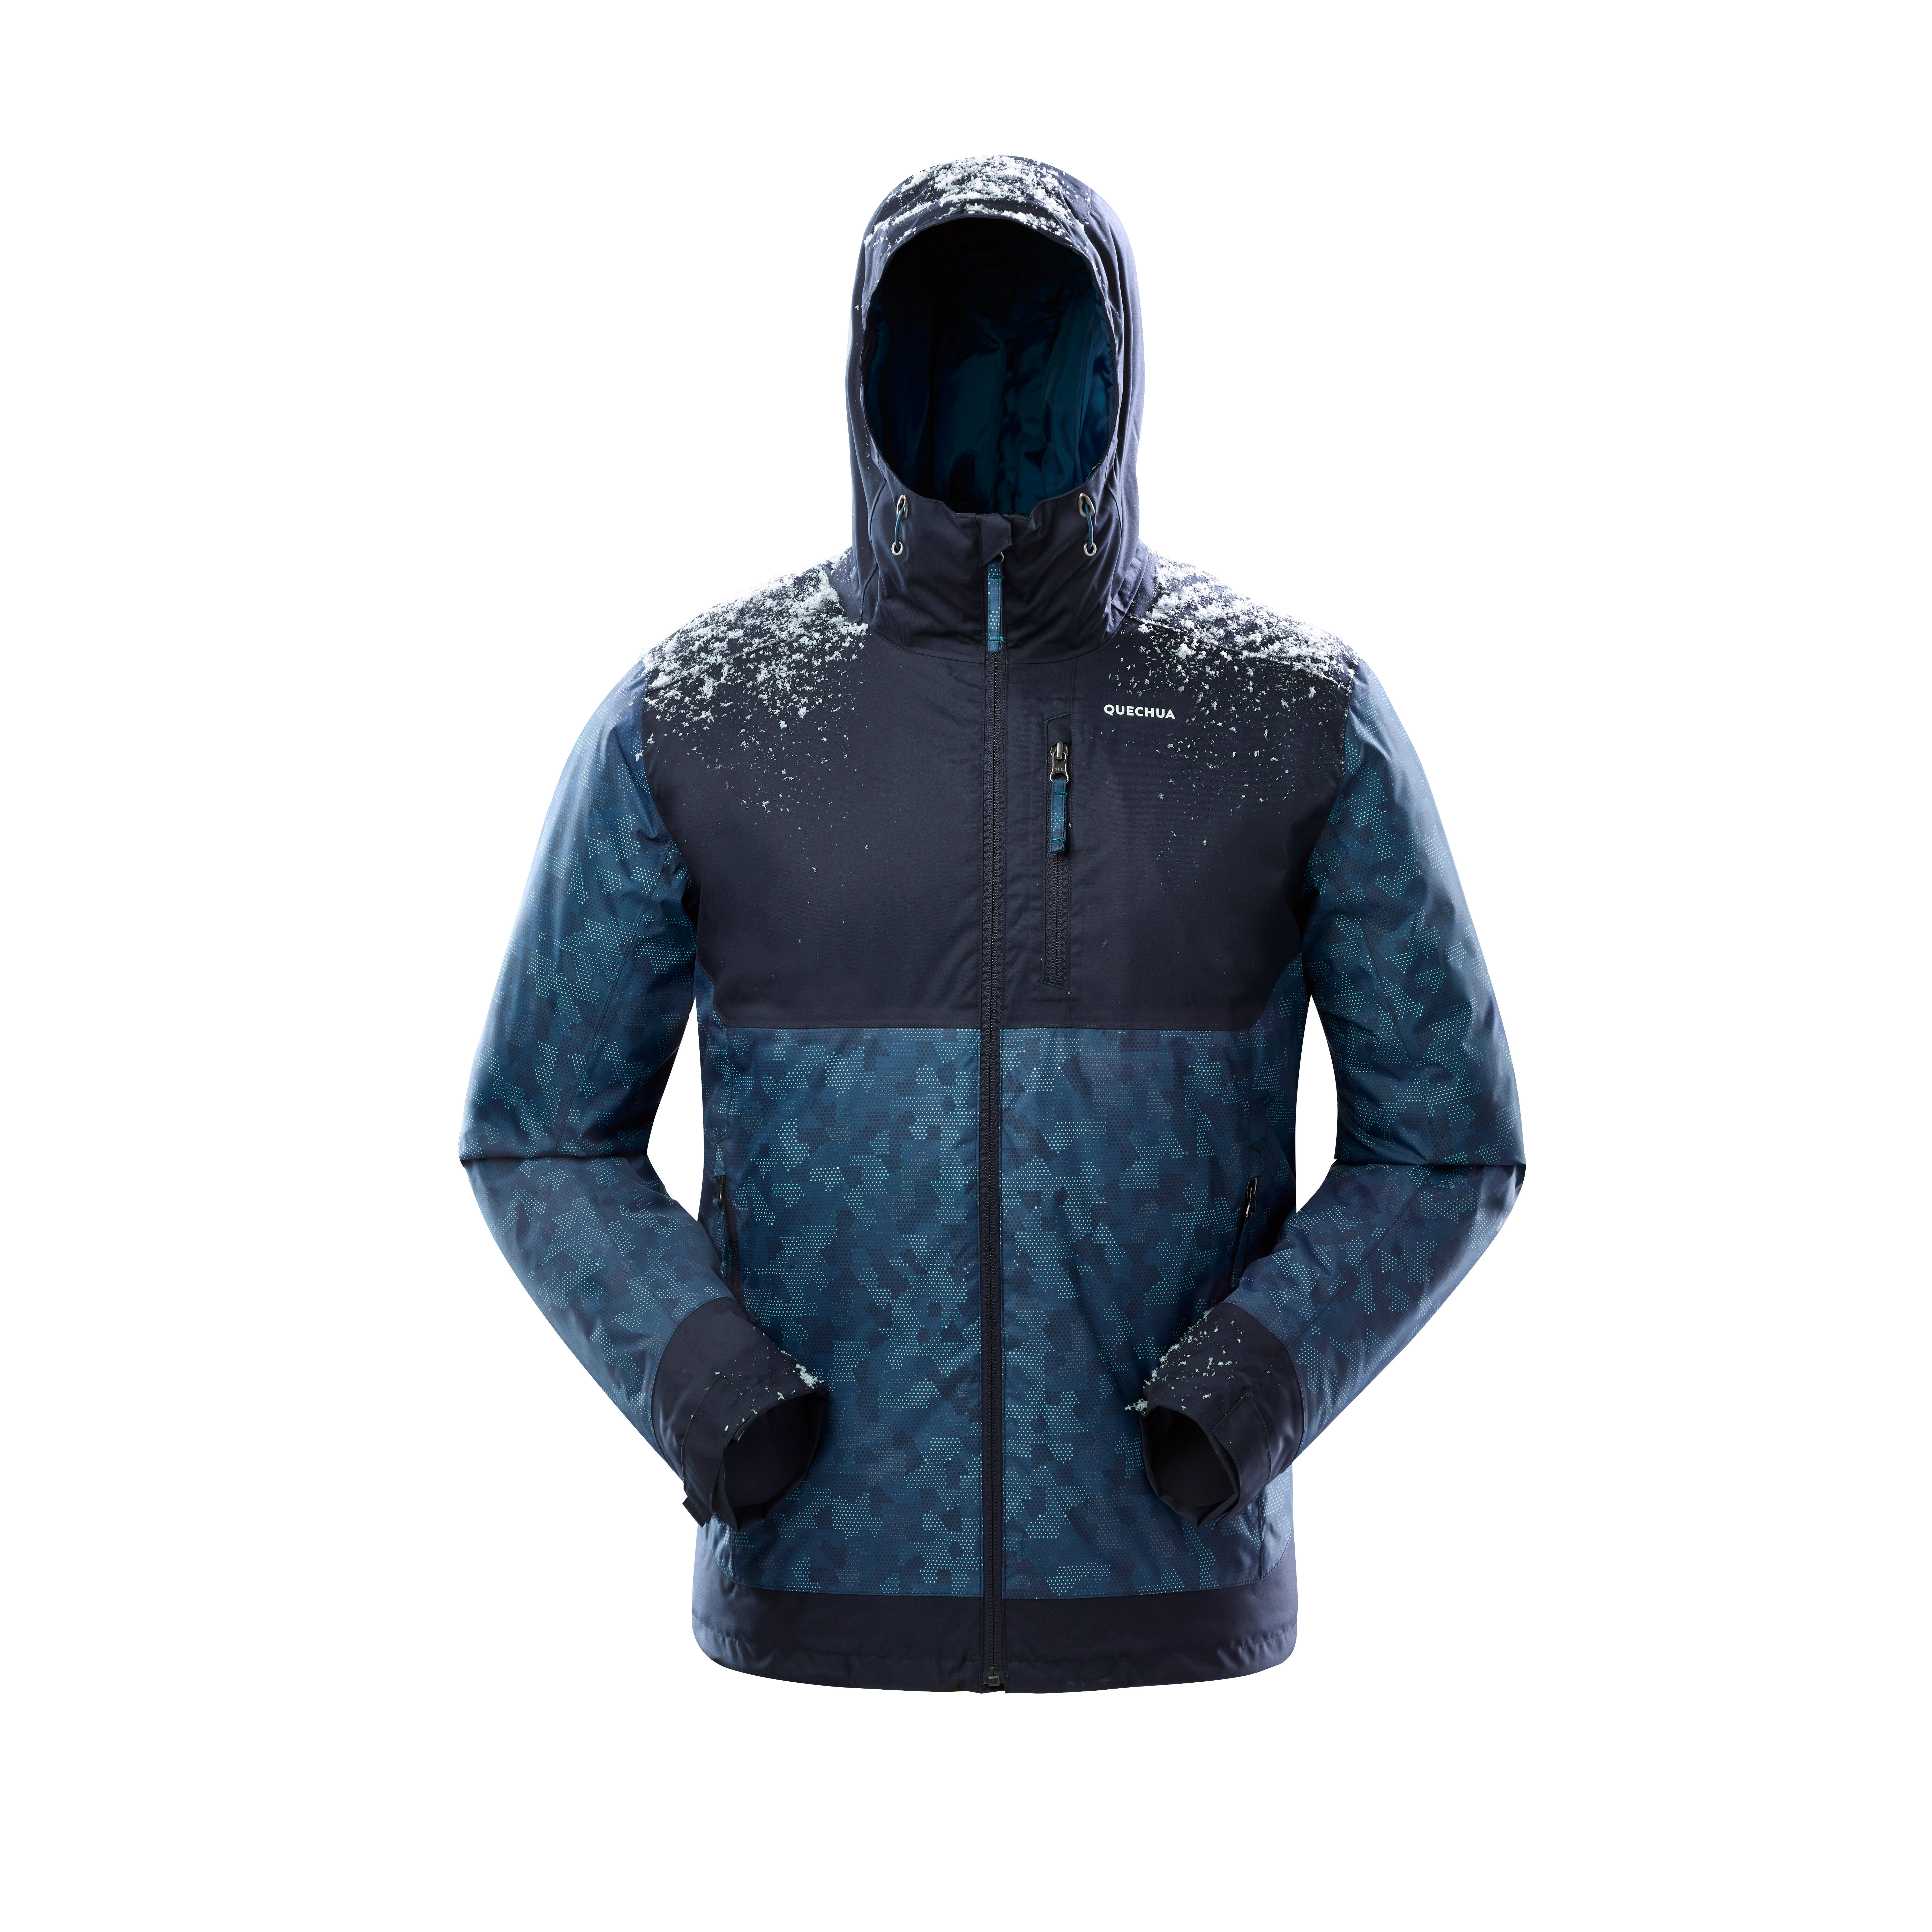 Men's Warm Hiking Fleece Jacket SH500 QUECHUA | Decathlon